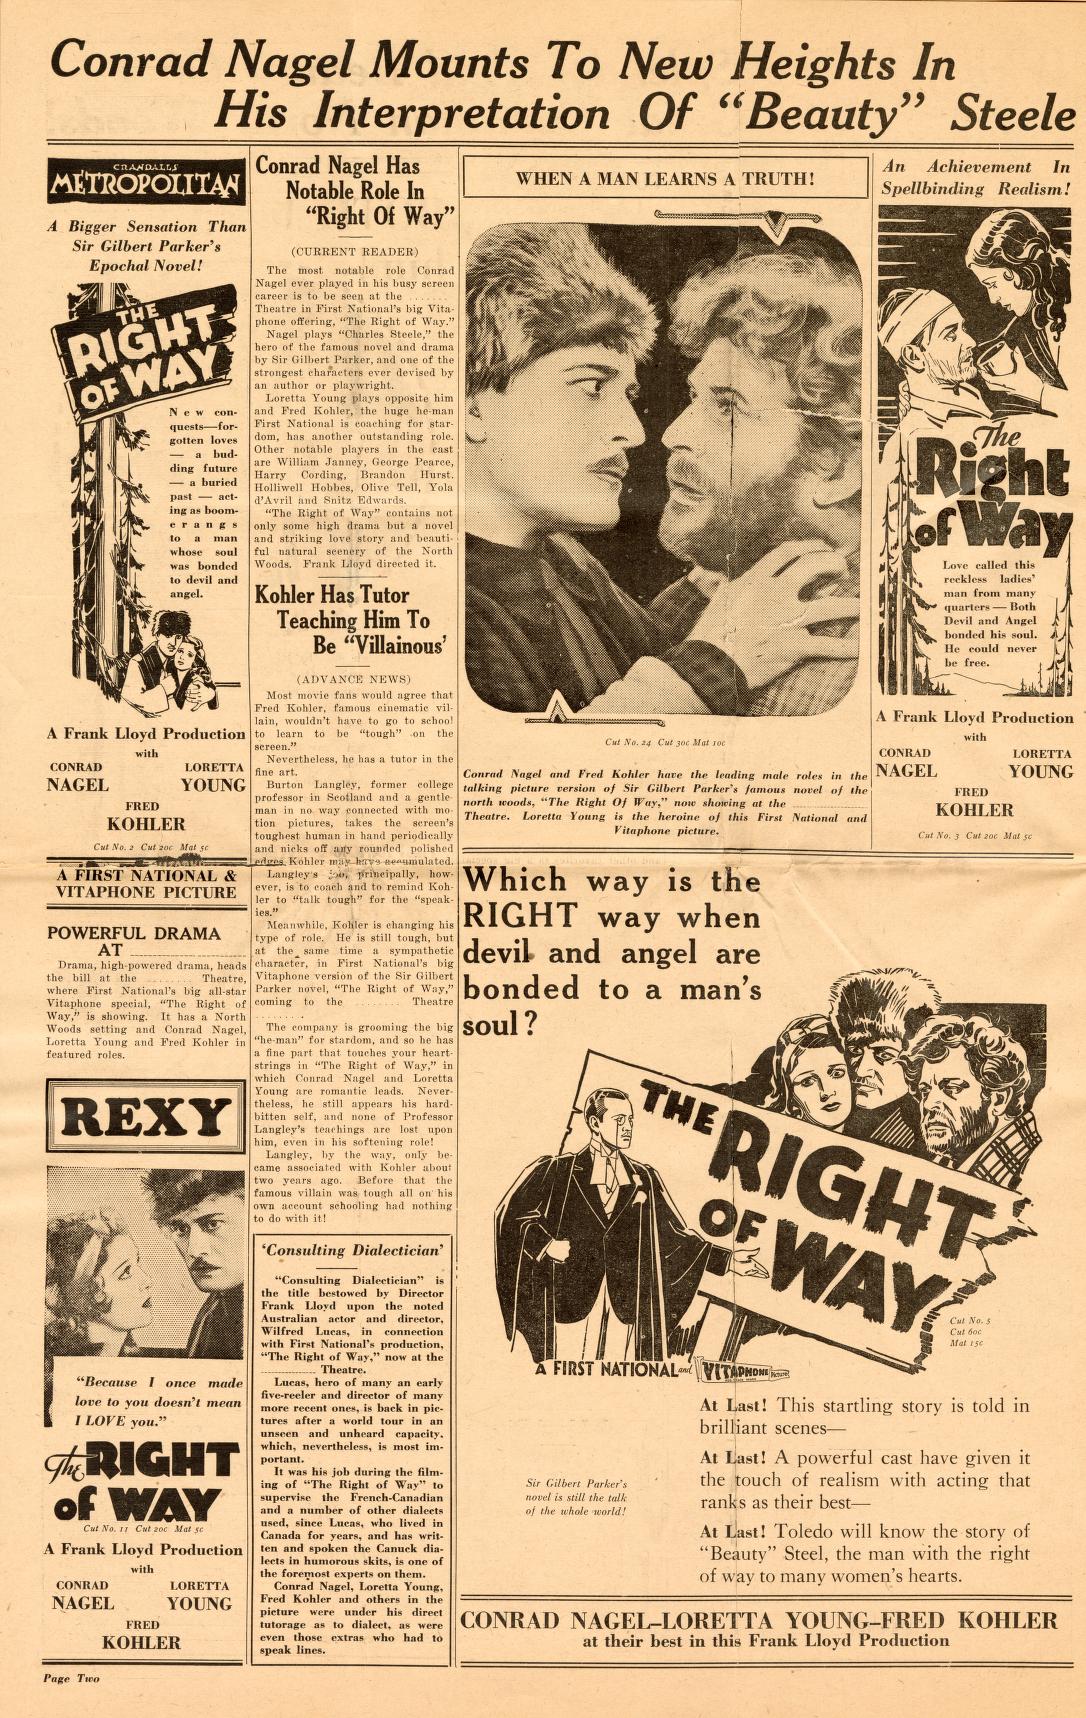 The Right of Way (Warner Bros. Pressbook, 1930)